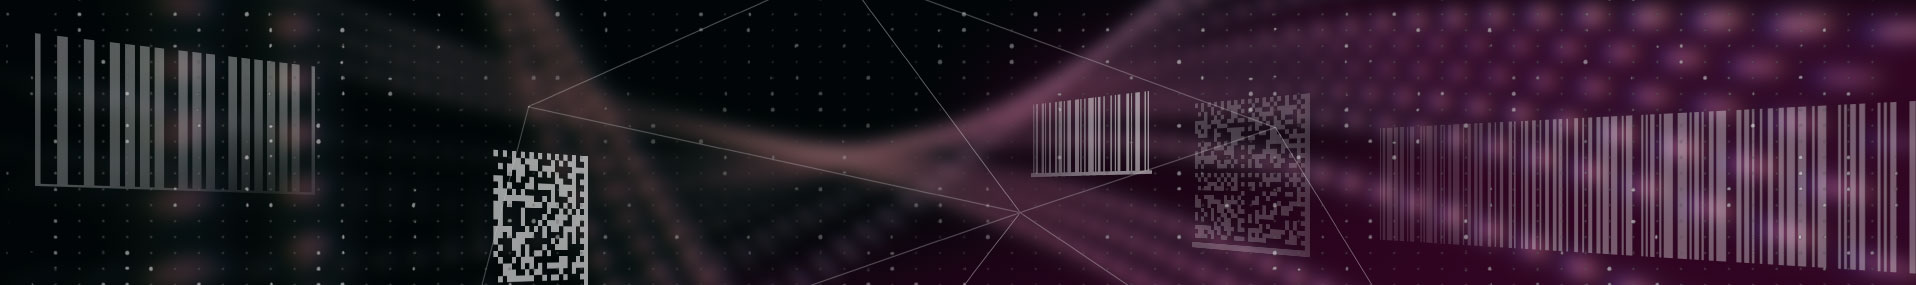 multiple barcode symbologies floating over purple background